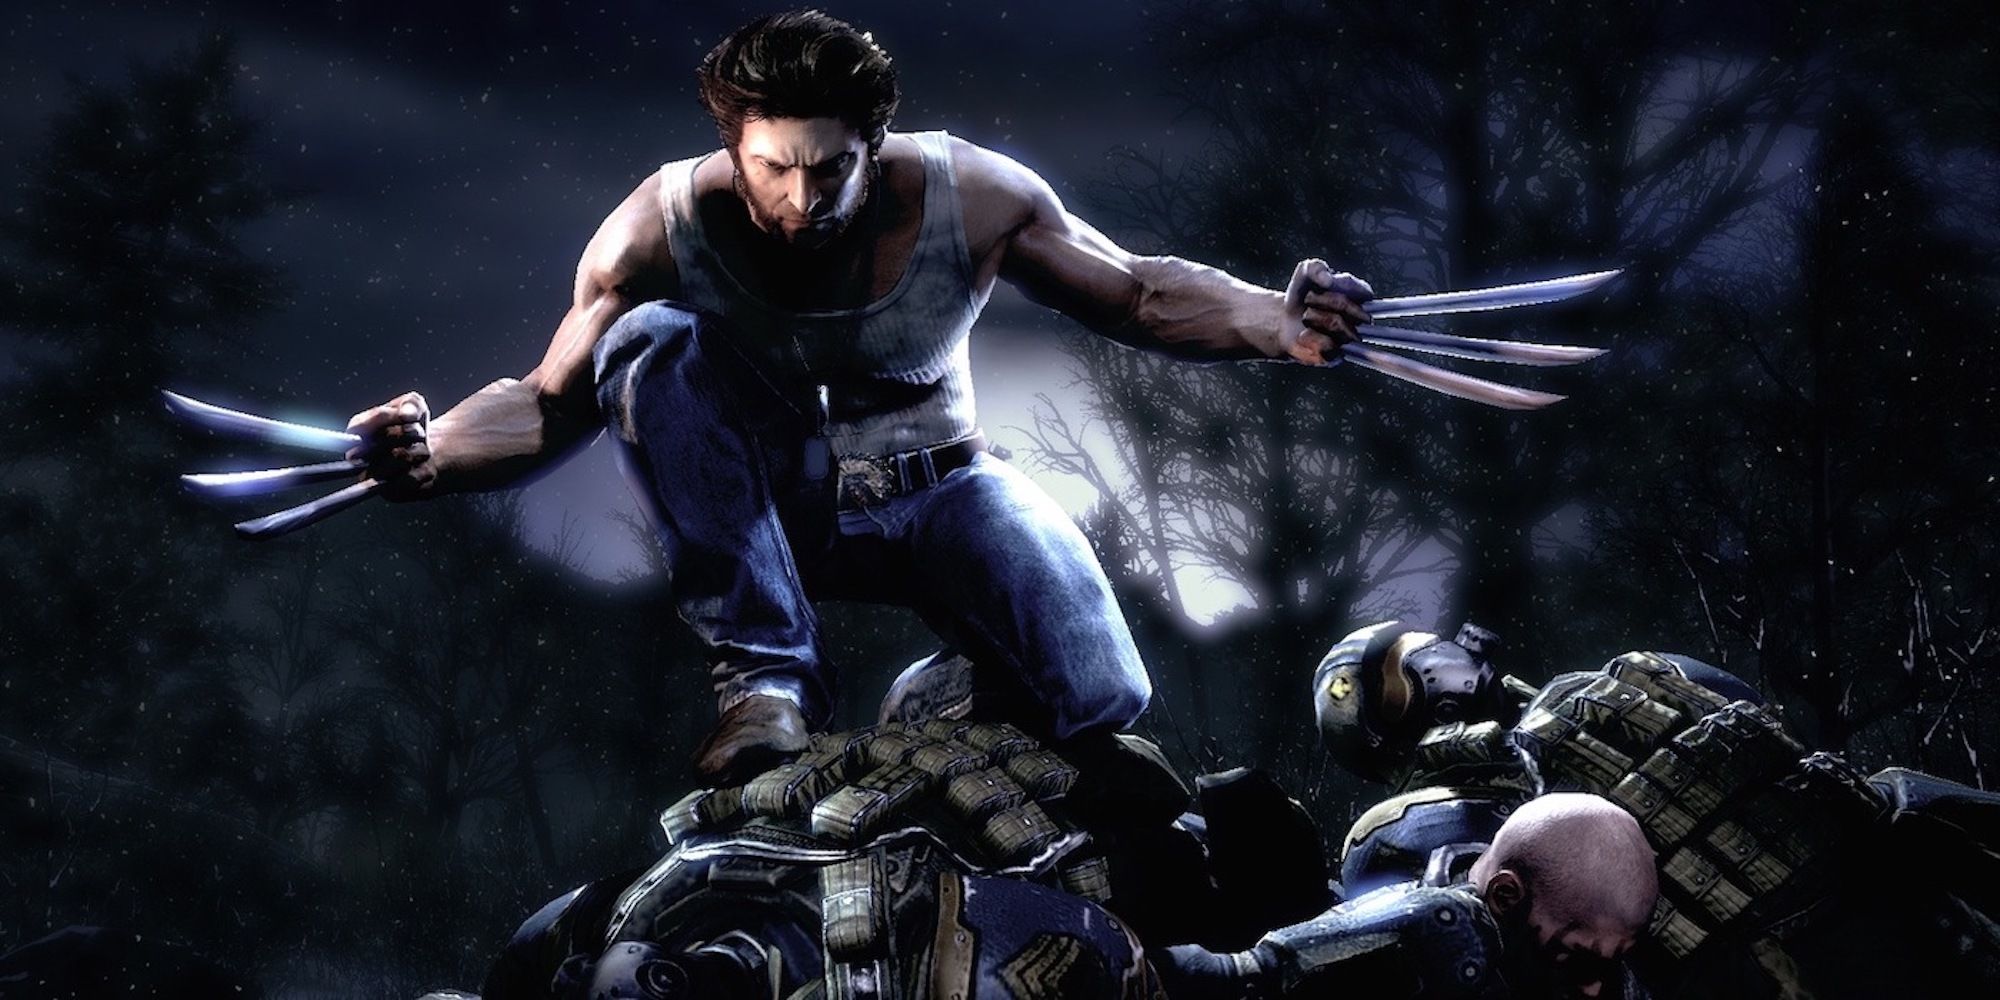 A cutscene featuring characters in X-Men Origins Wolverine